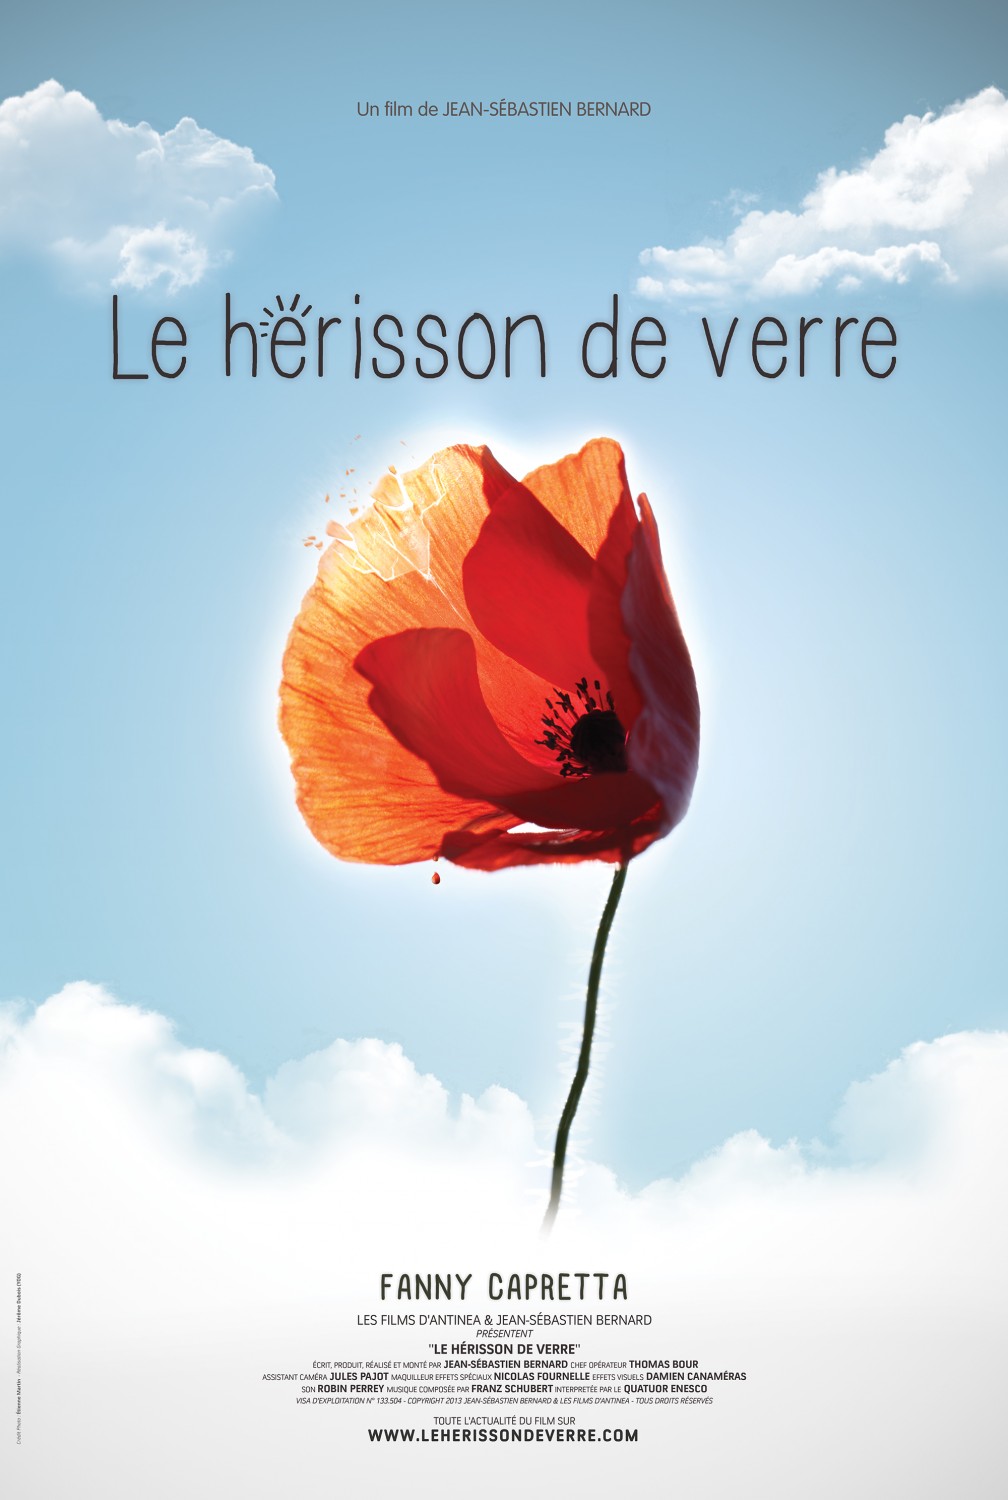 Extra Large Movie Poster Image for Le hrisson de verre